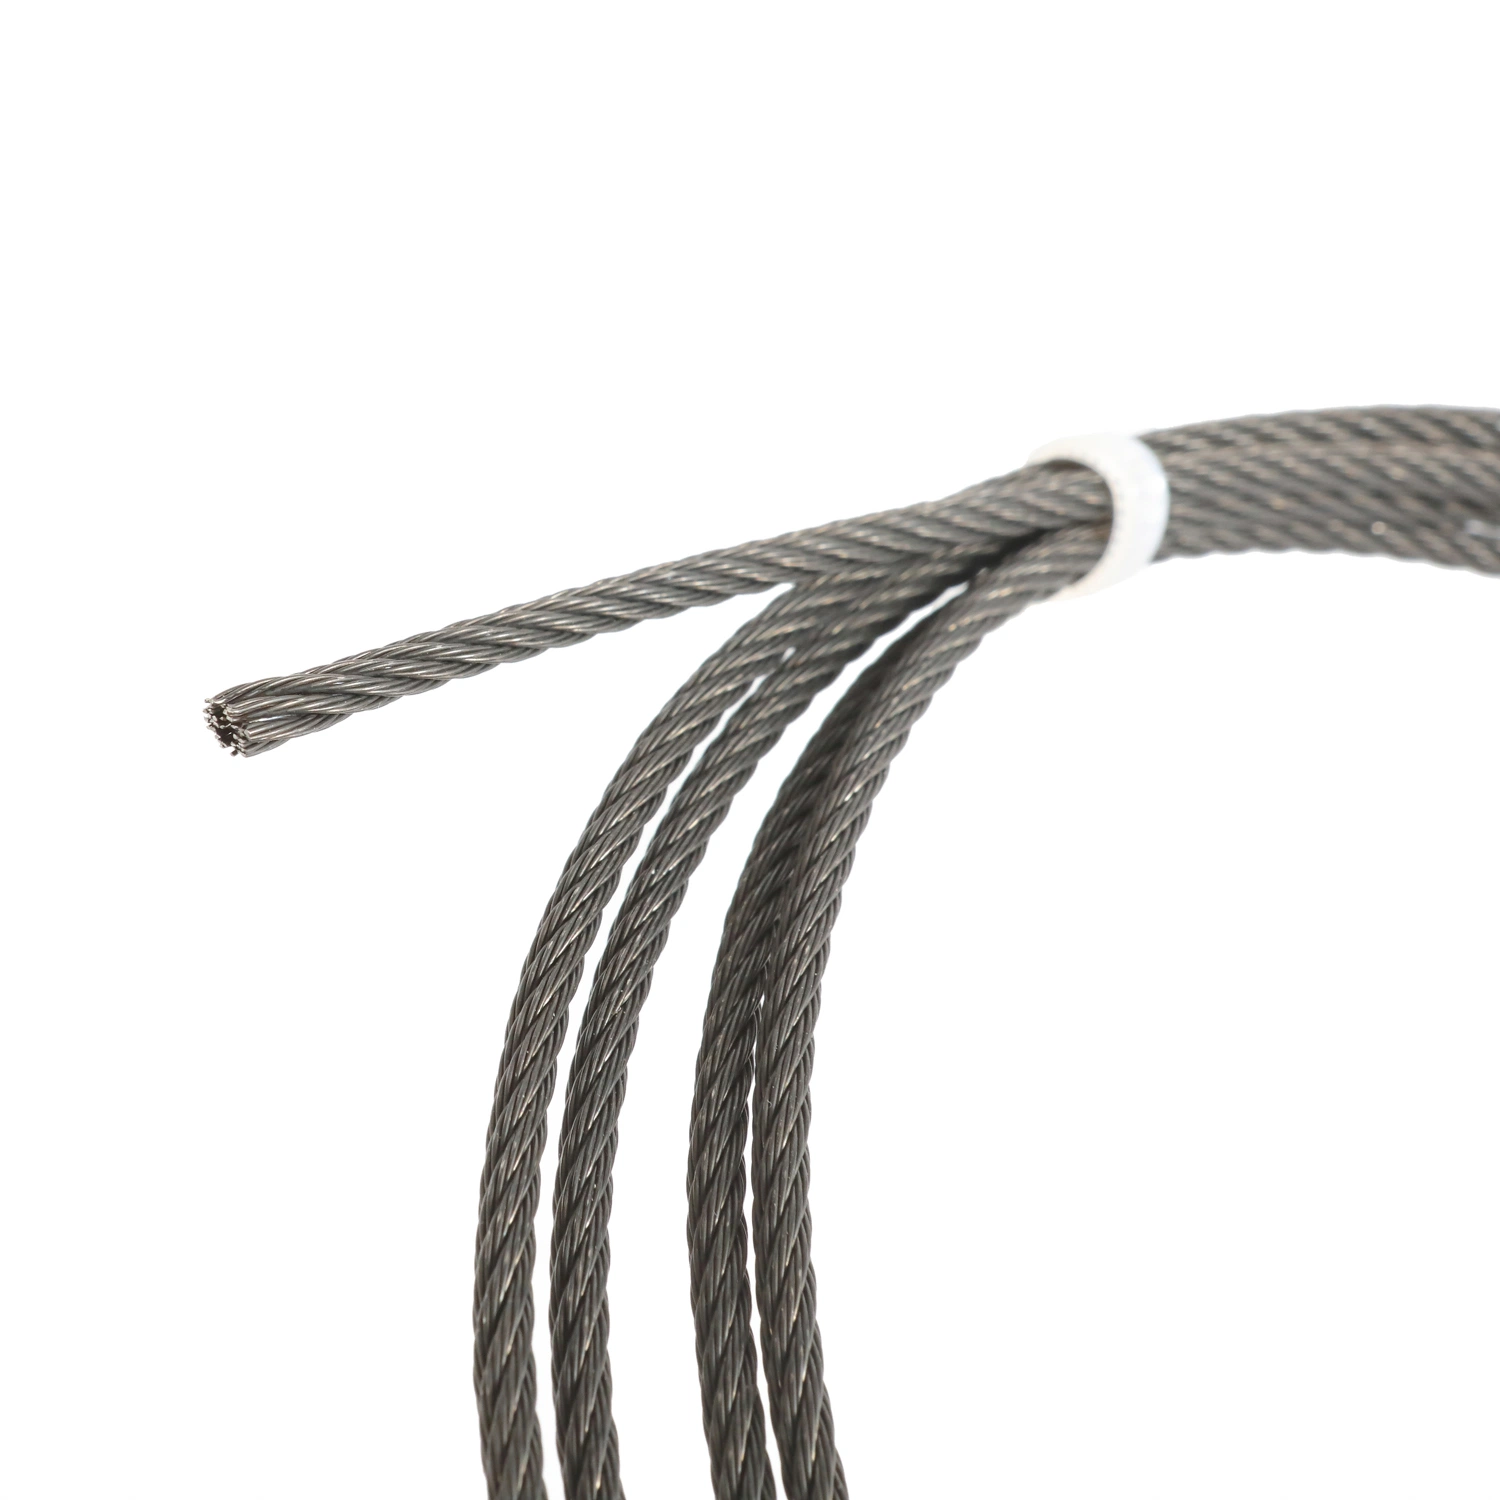 Black Galvanized Steel Wire Rope by Black Oxide 1X19 1X7